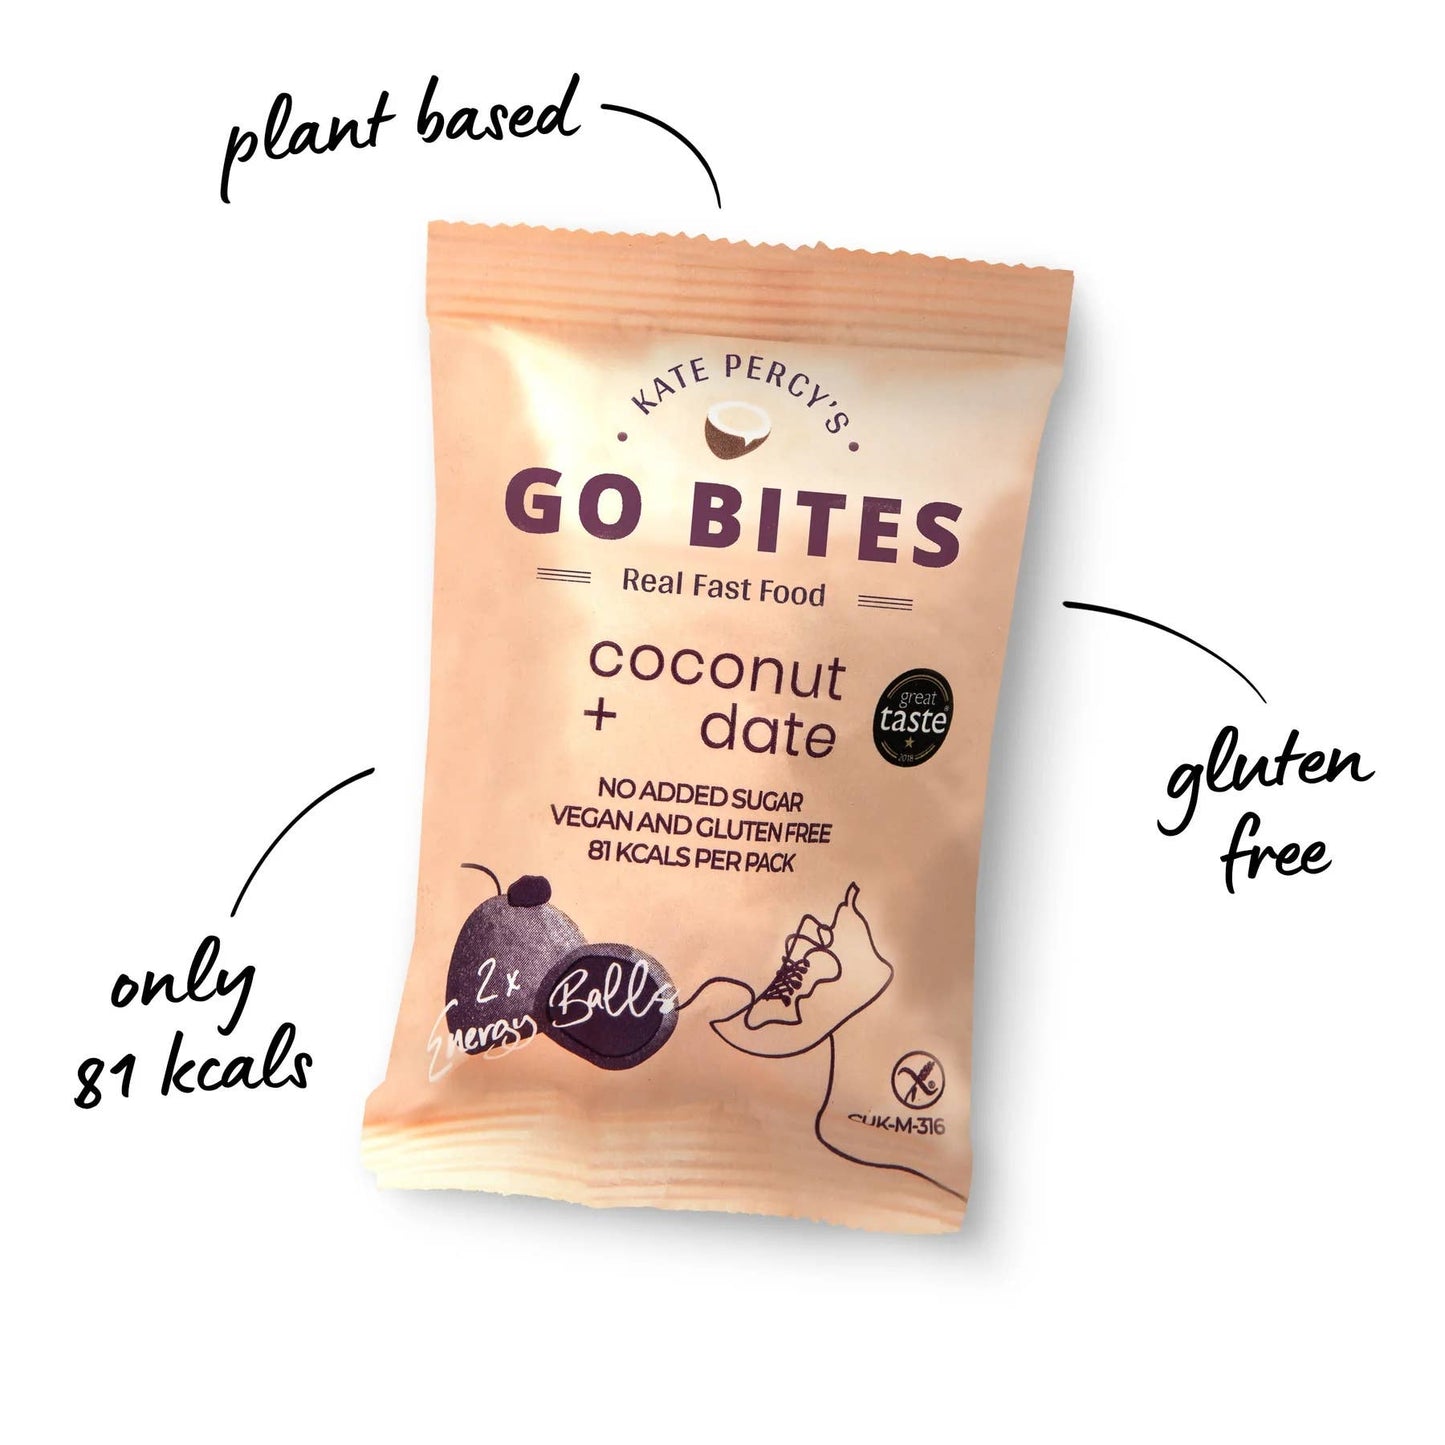 Kate Percy's Go Bites Coconut & Date -